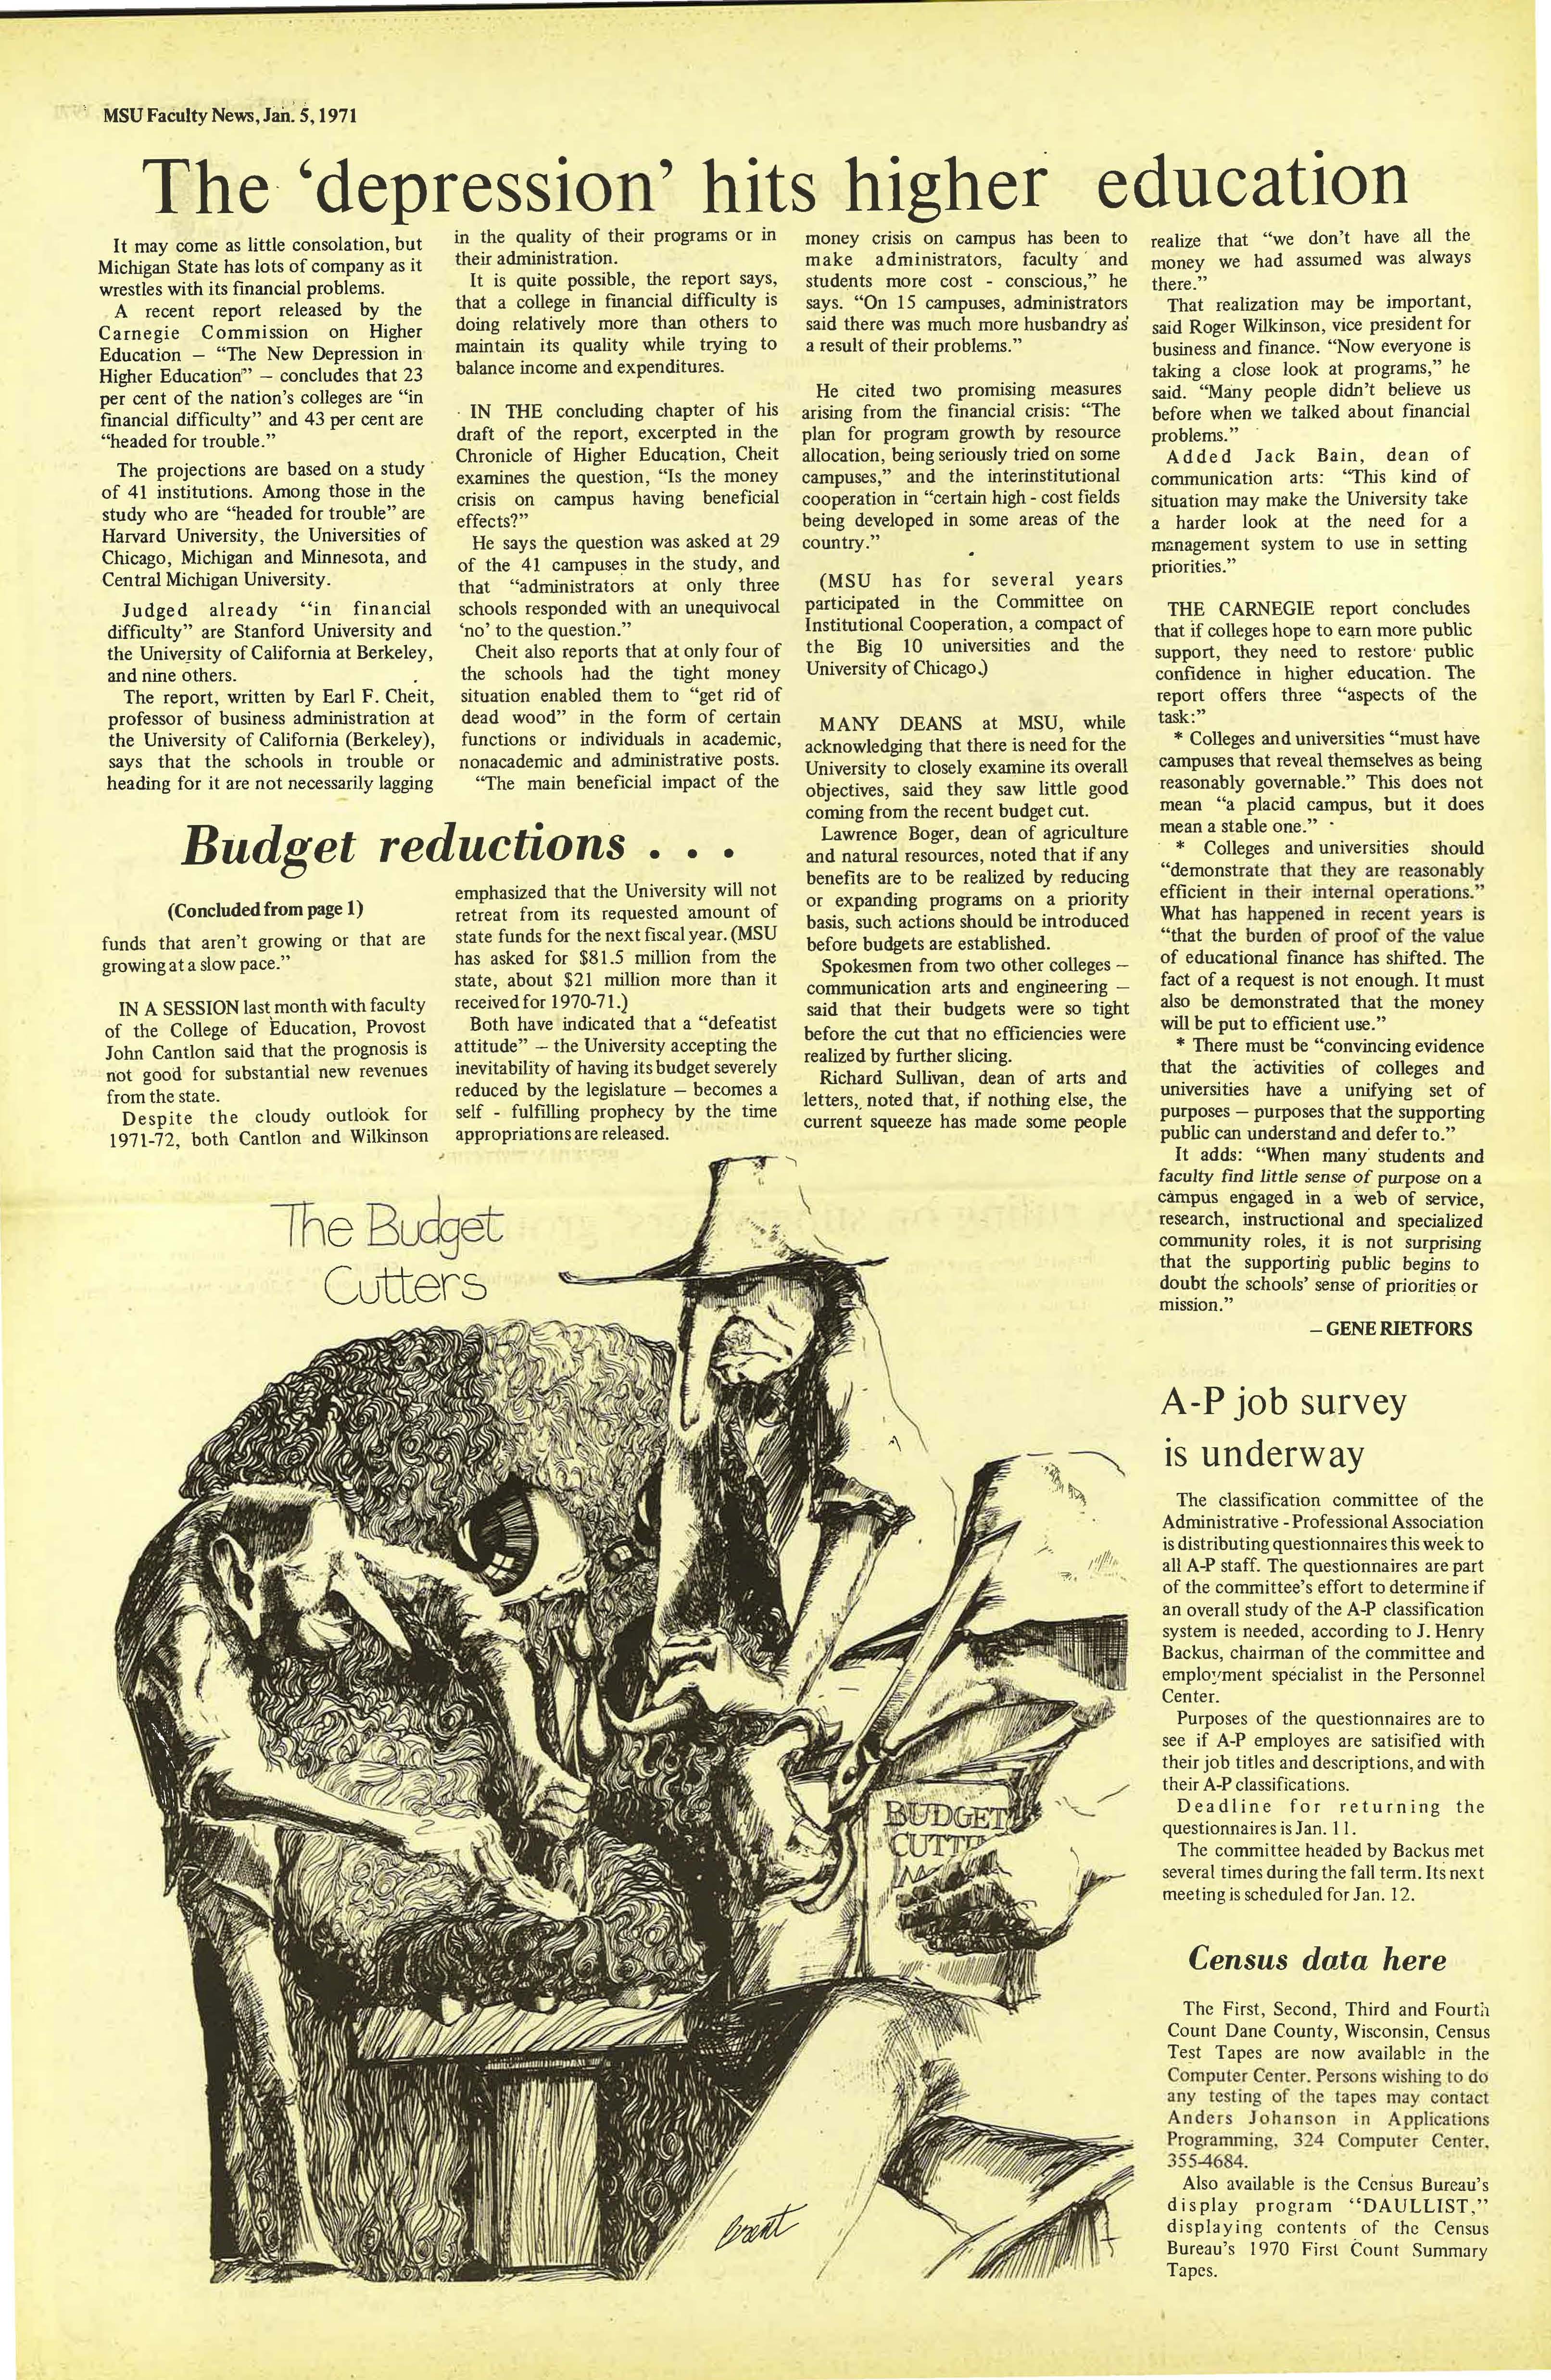 MSU News Bulletin, vol. 2, No. 35, August 26, 1971